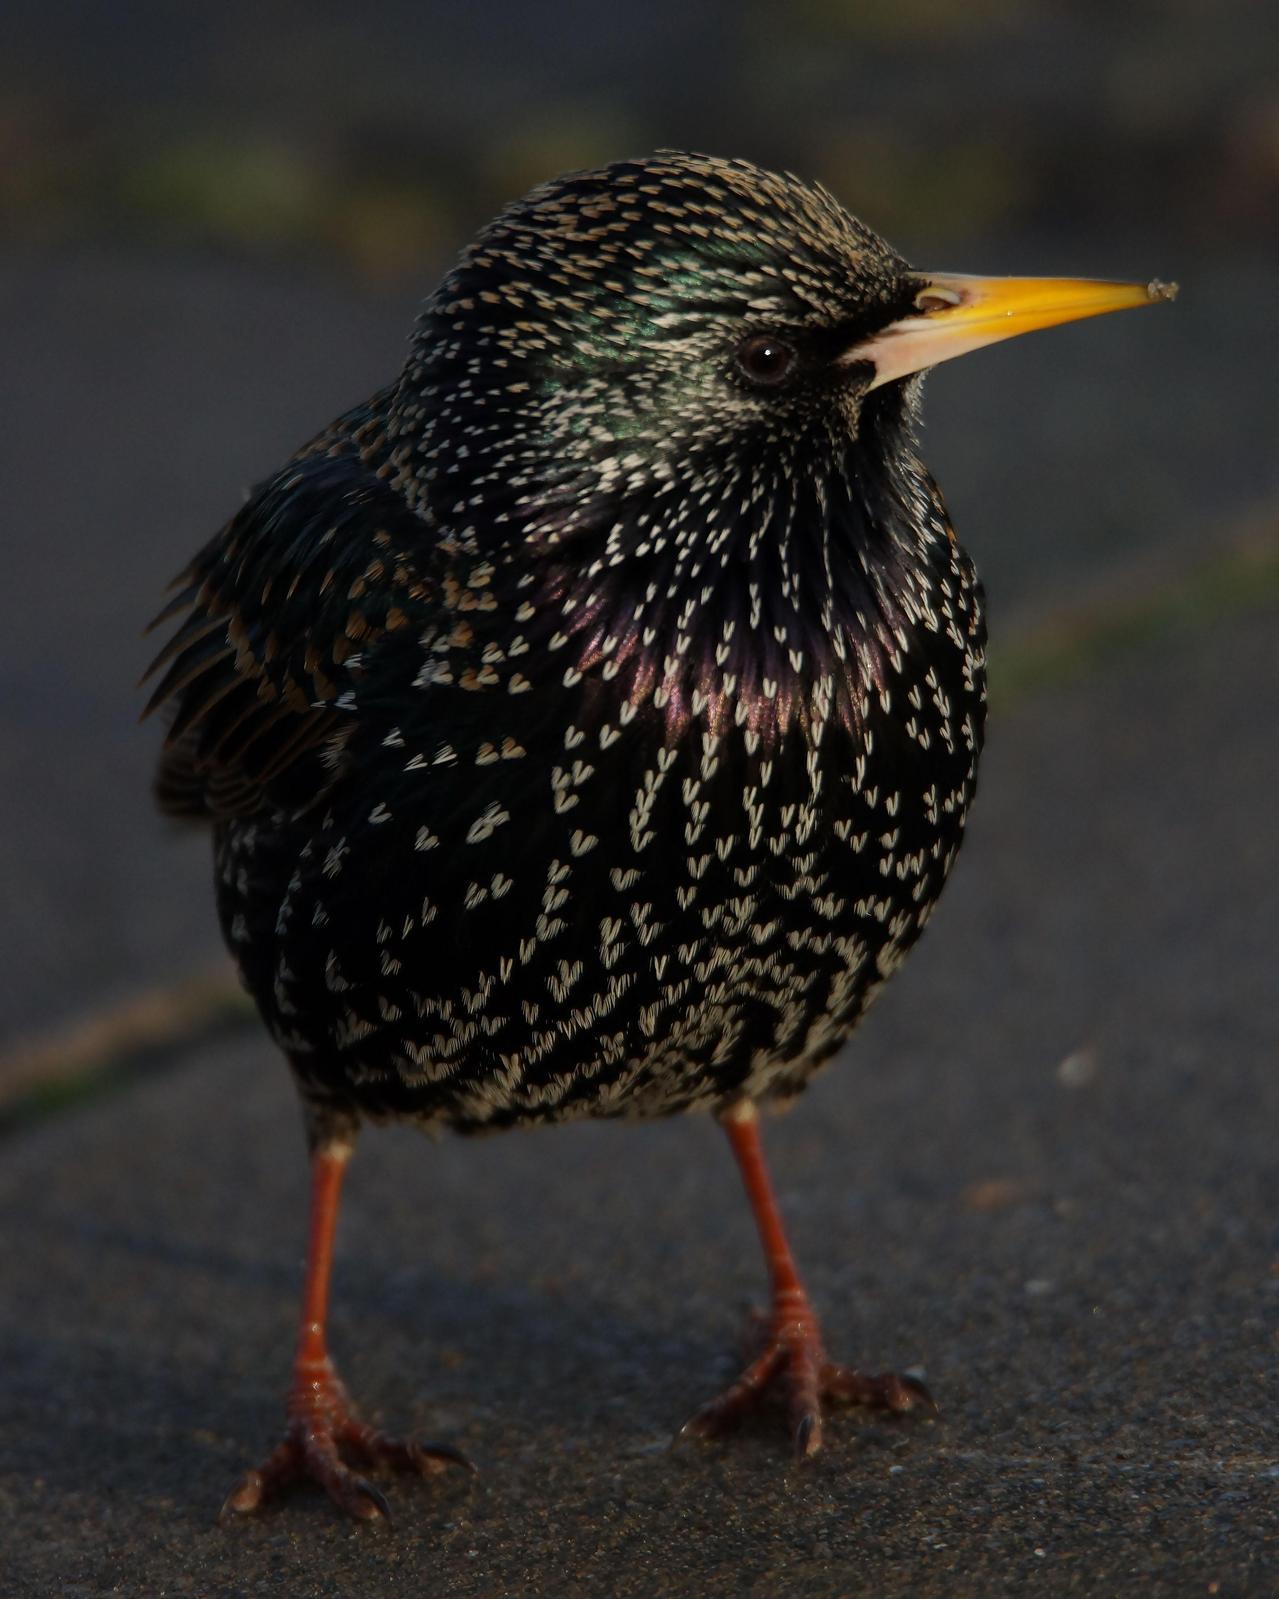 European Starling Photo by Steve Percival